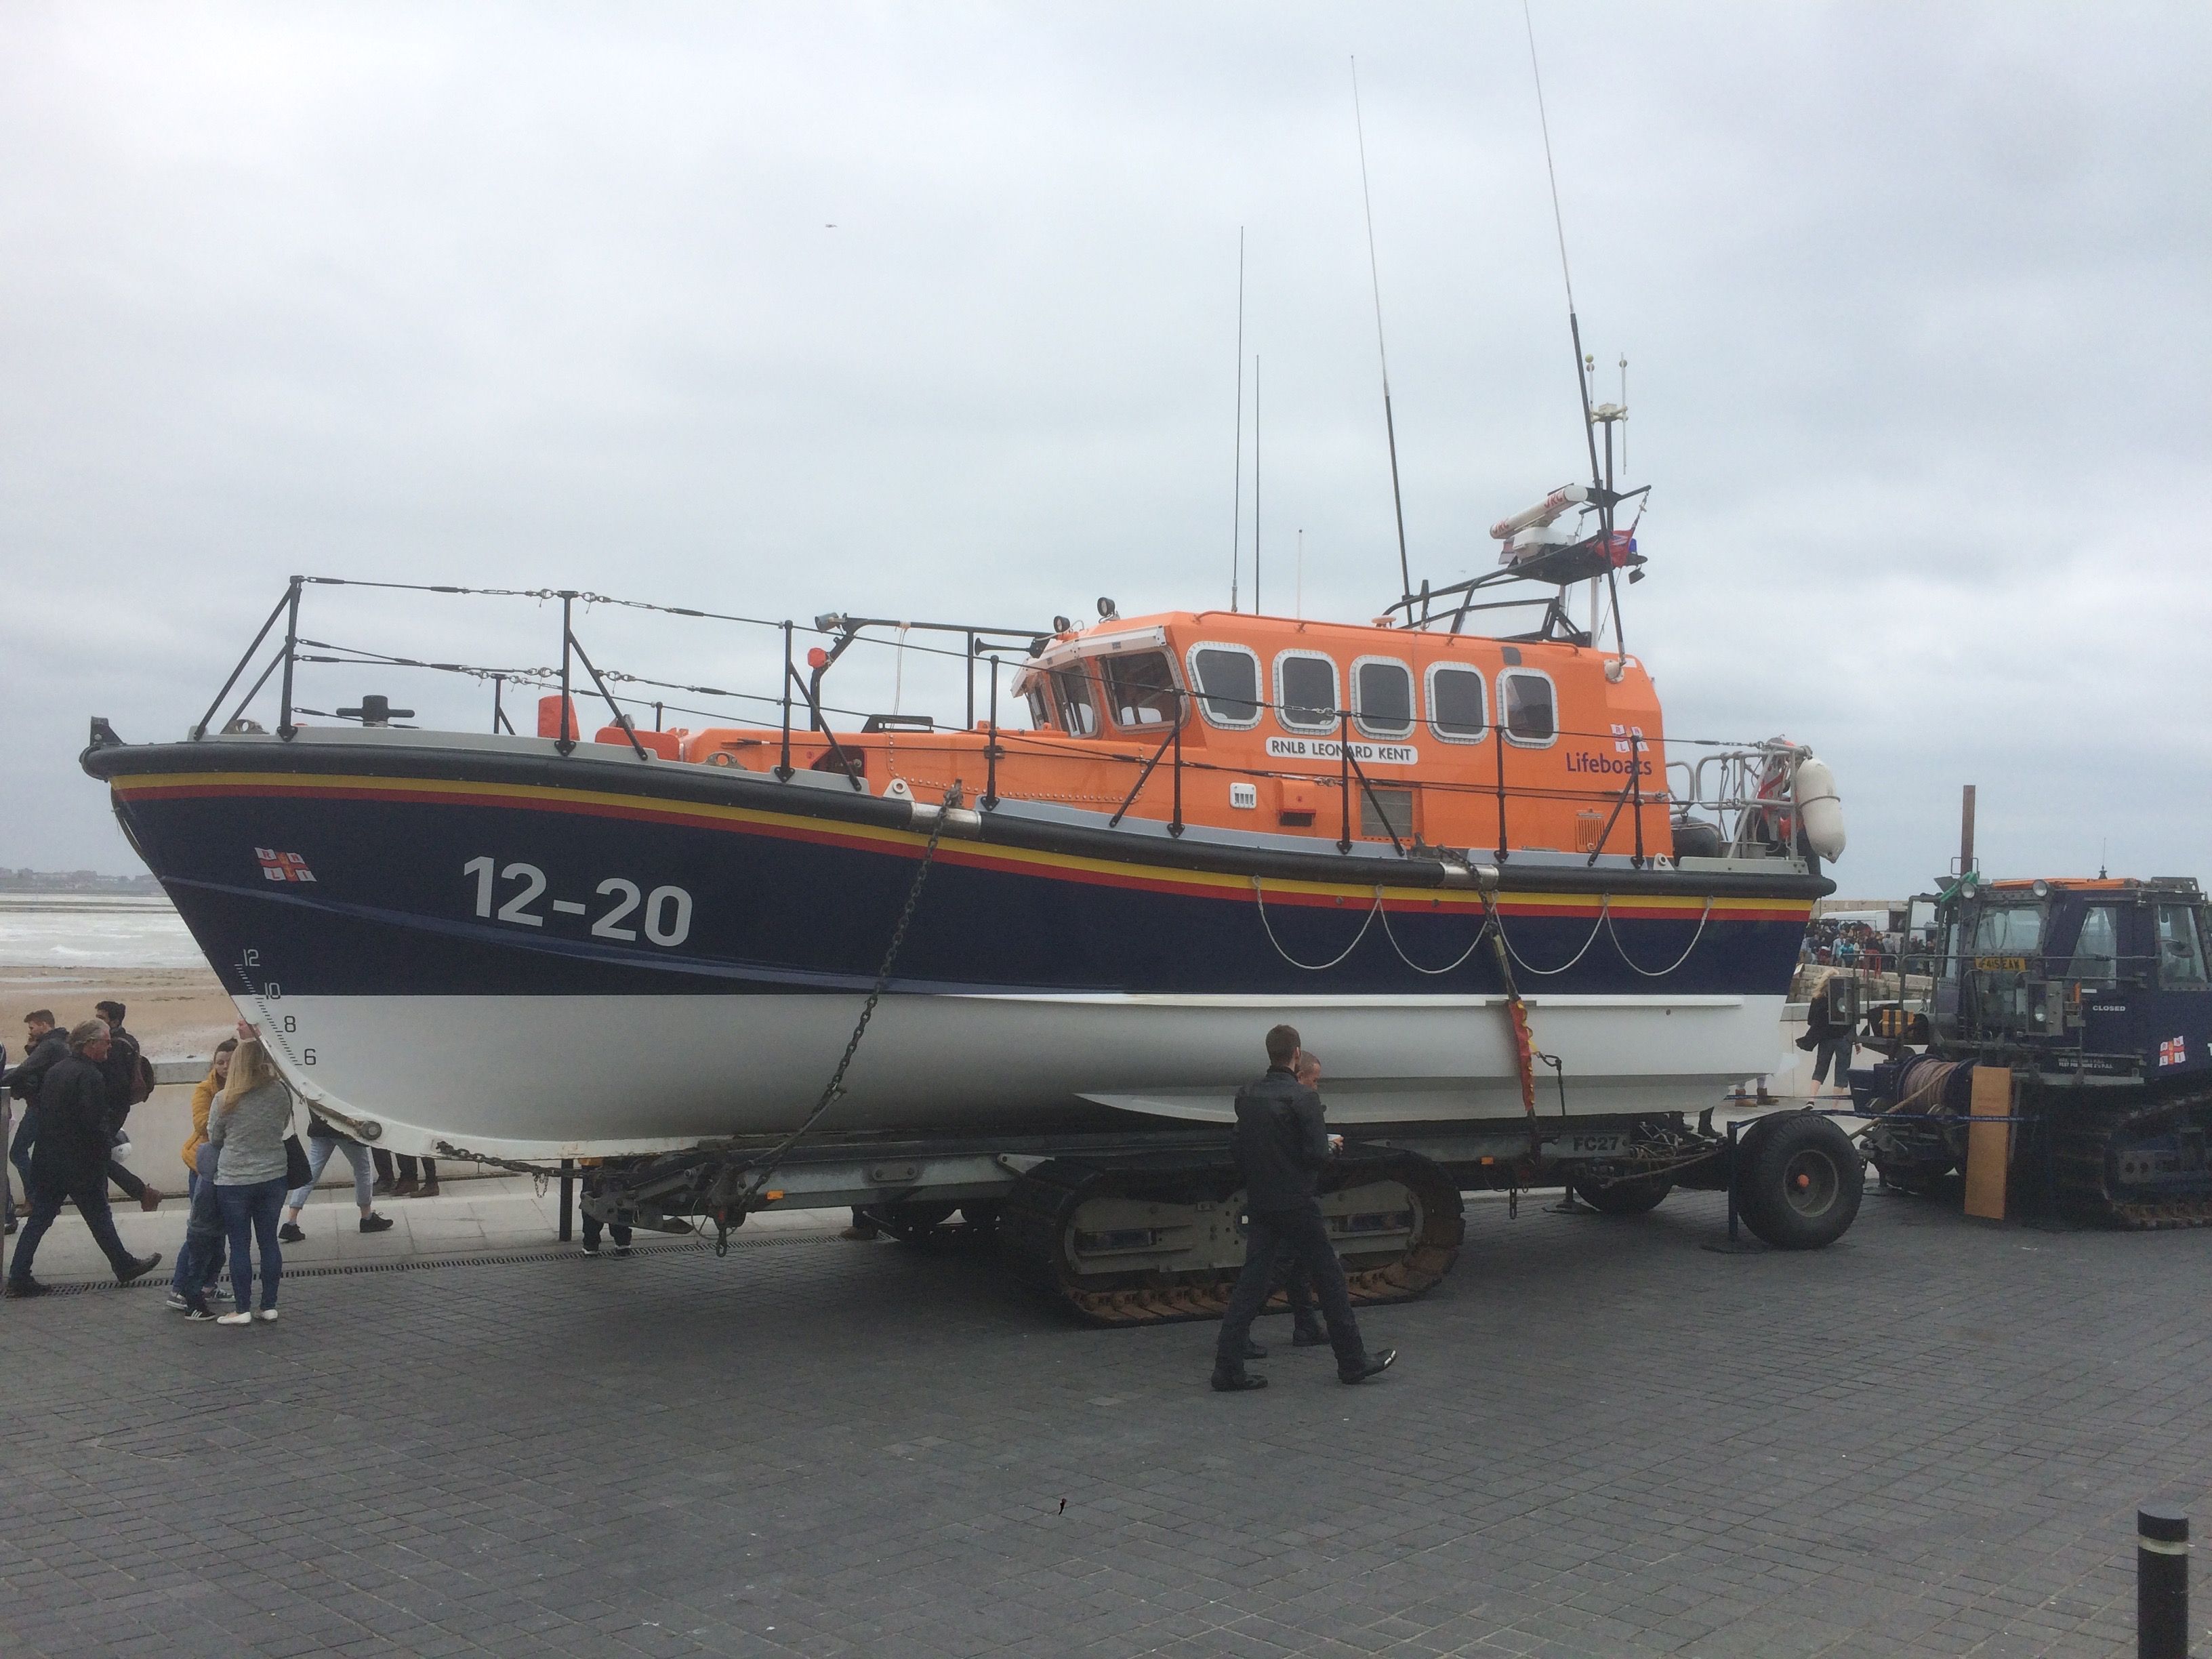 Margate Lifeboat